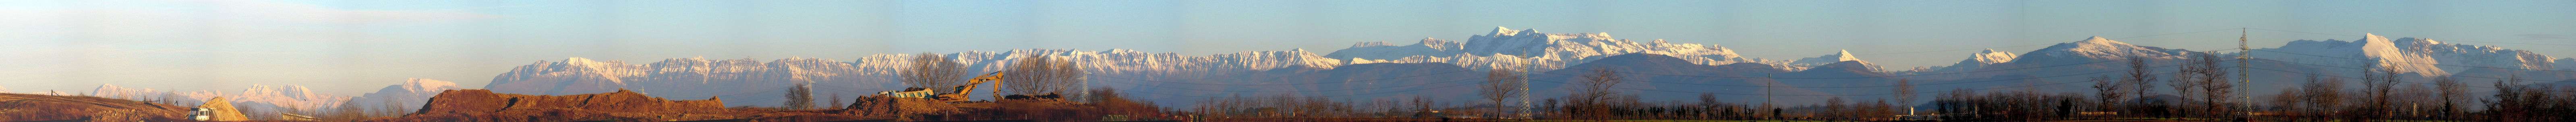 View of Alpi Giulie, eastern mountains of Friuli-Venezia Giulia: 200 KB; click on the image to enlarge